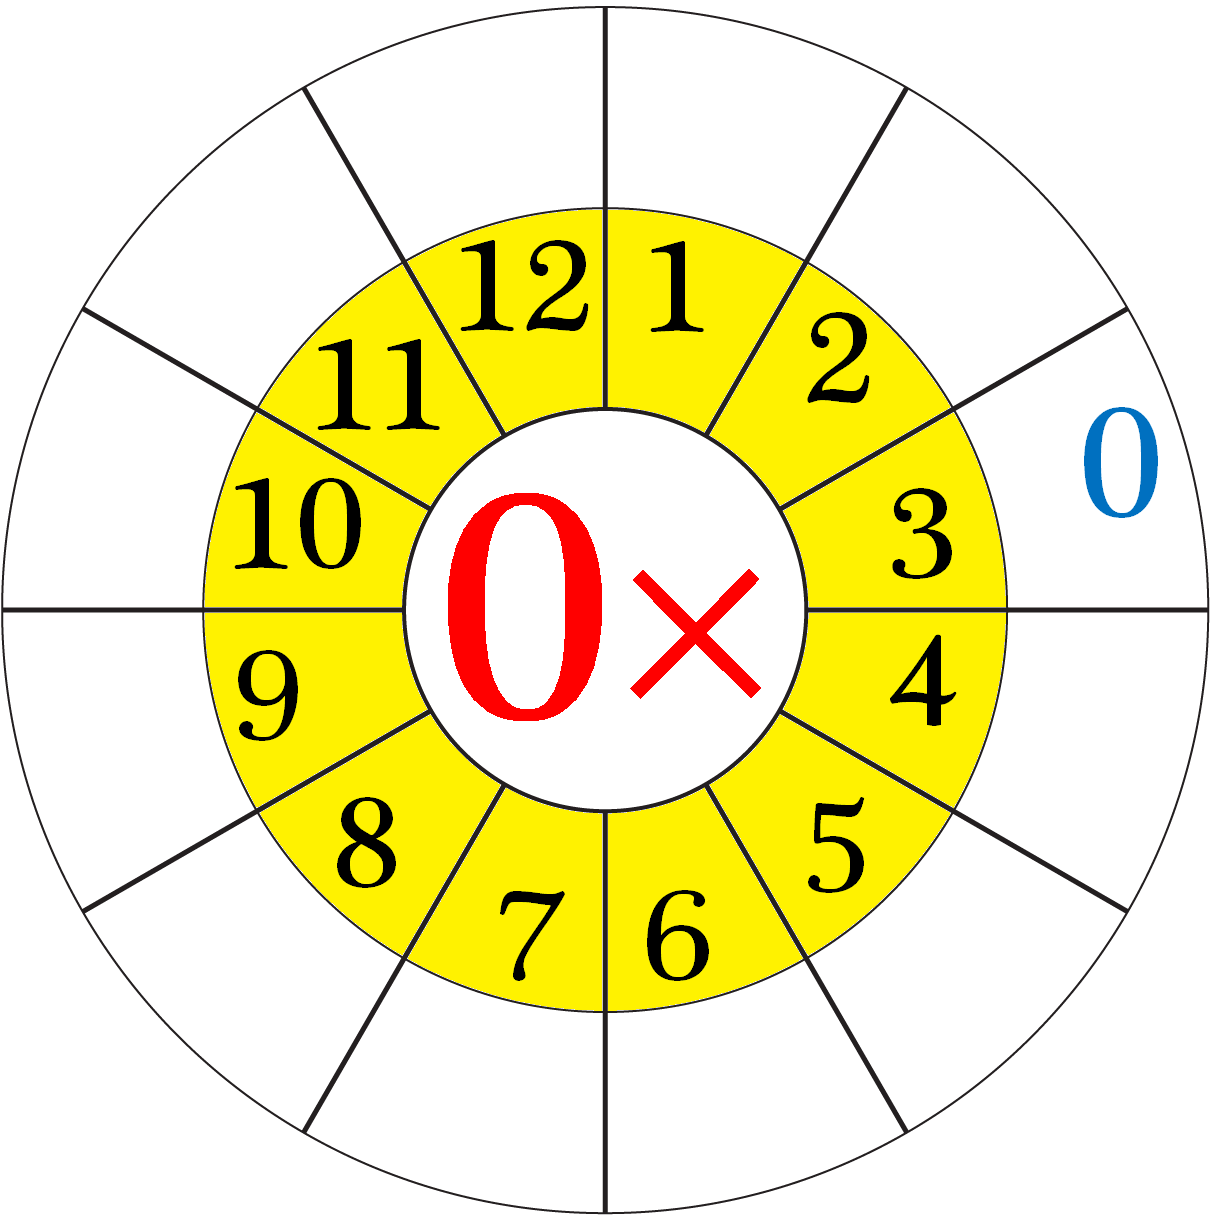 Worksheet on Multiplication Table of 0